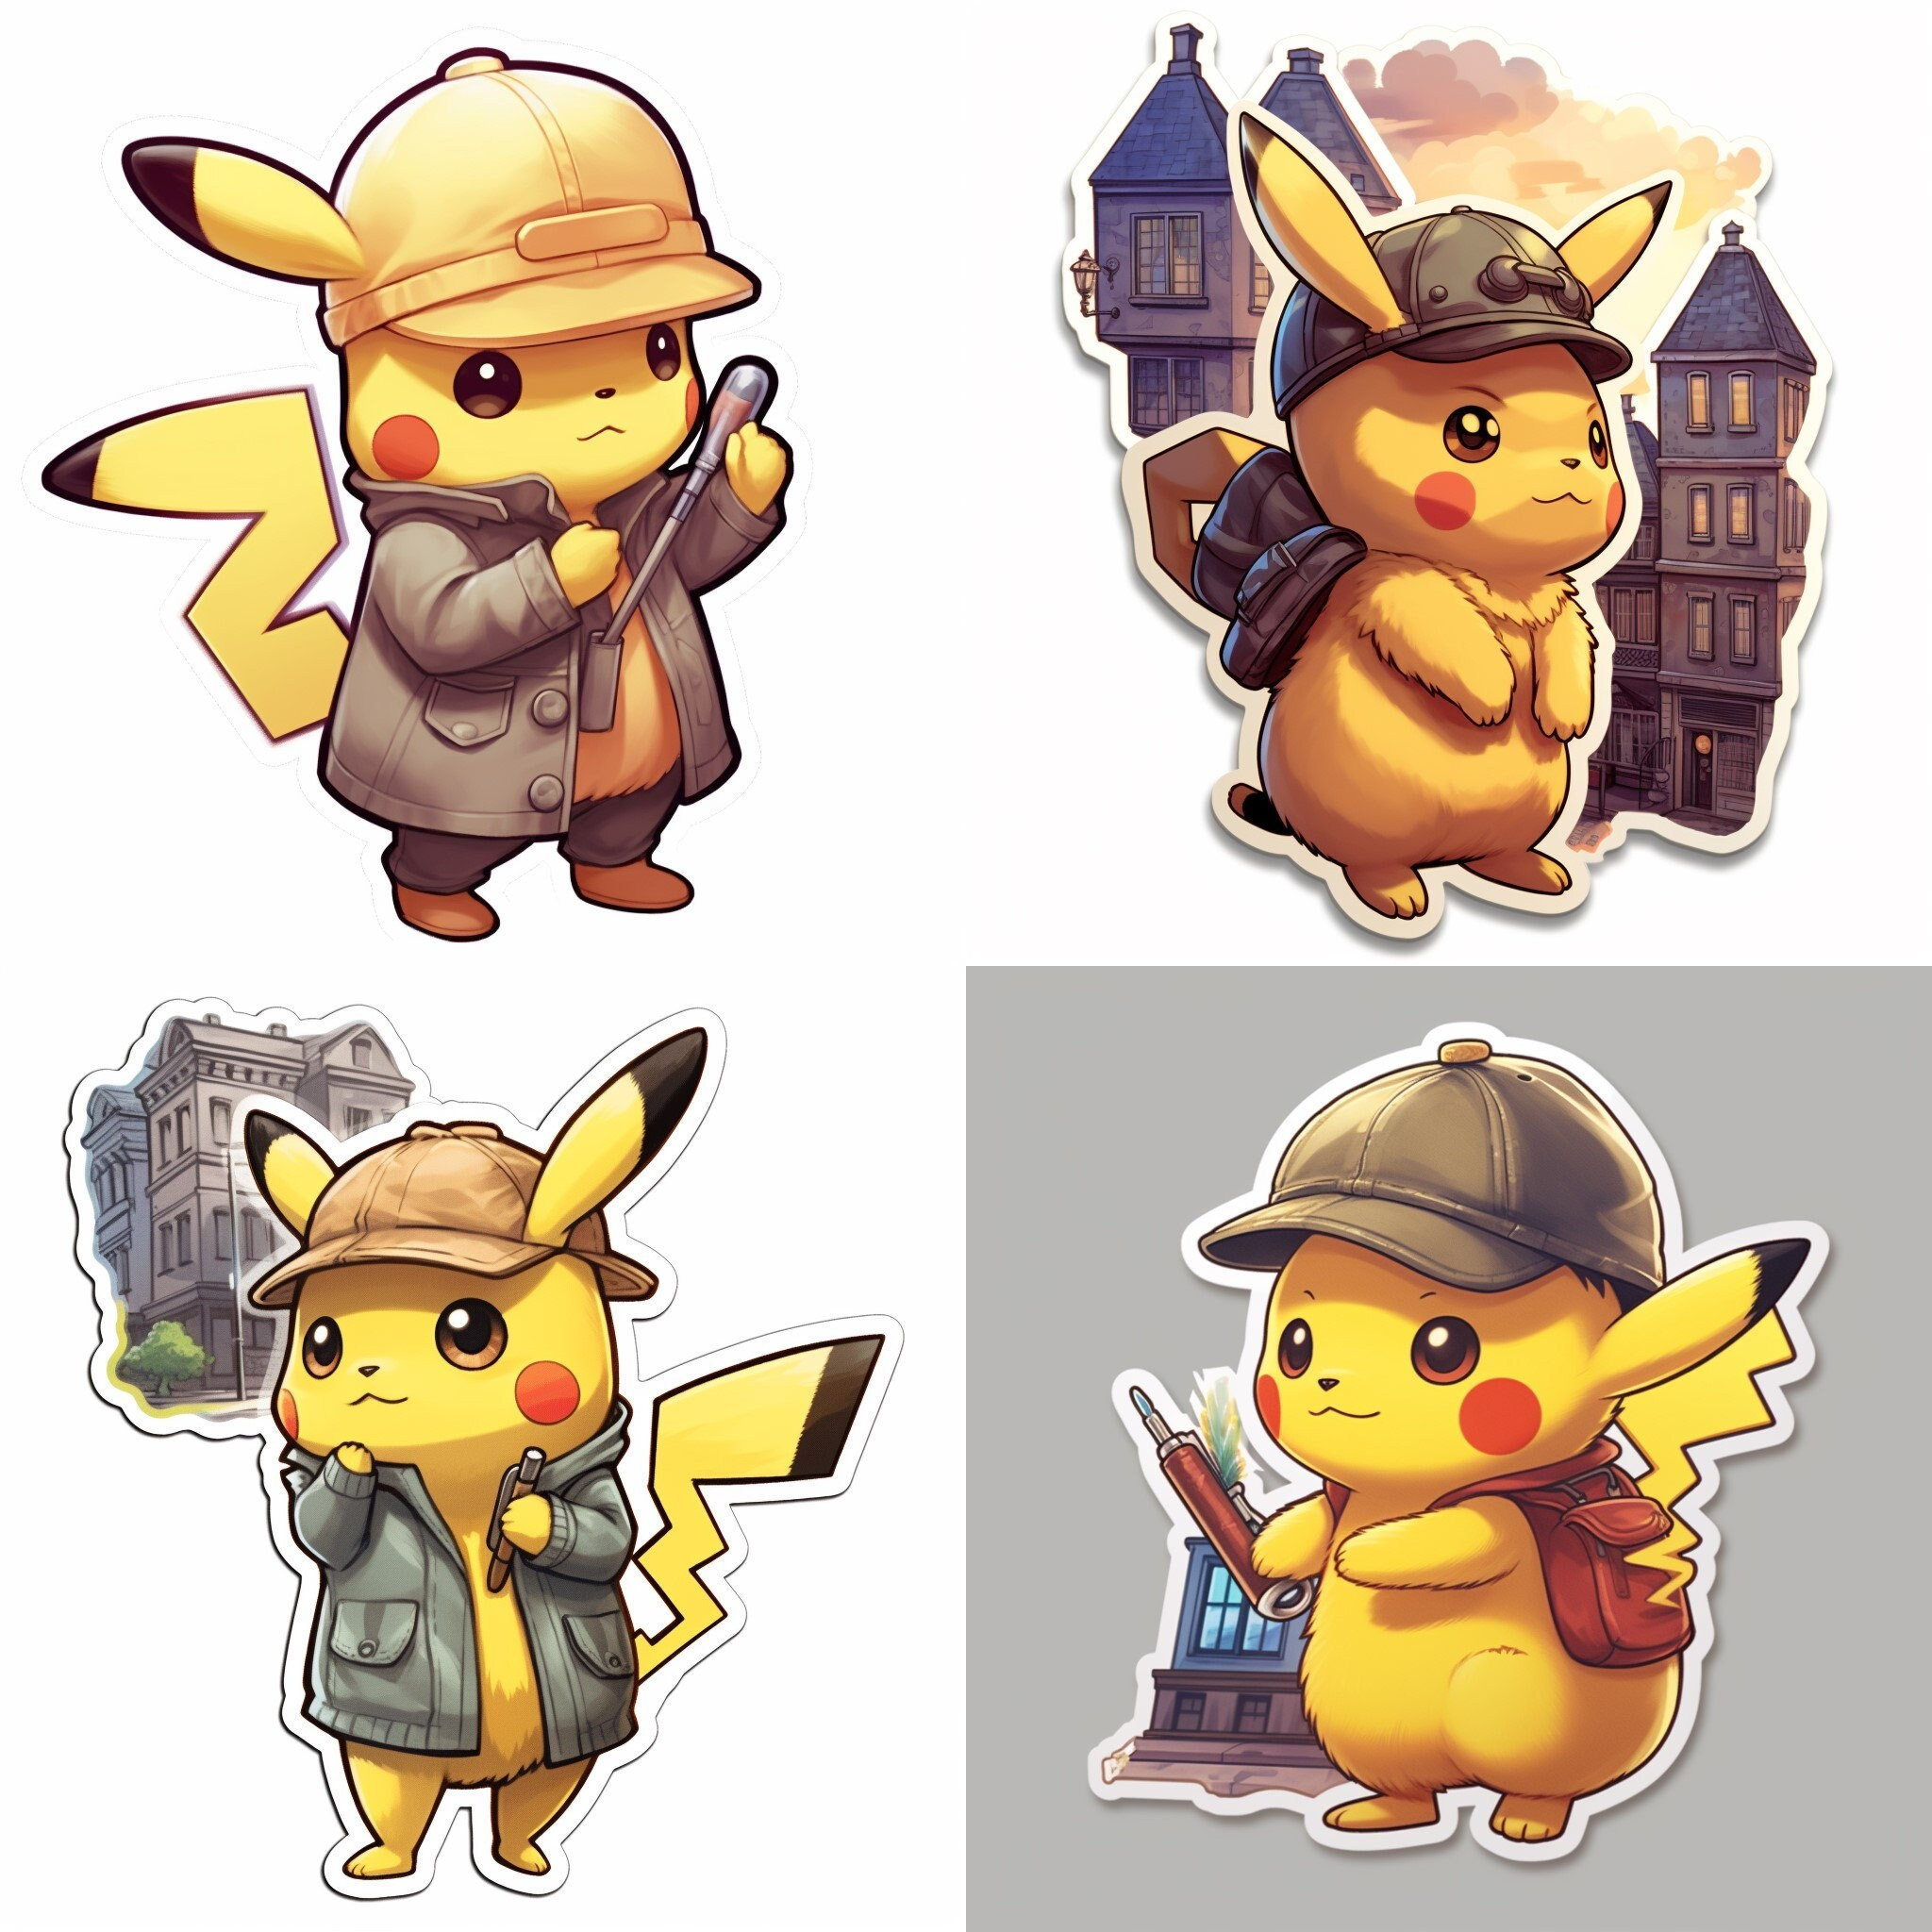 POKÉMON Detective Pikachu Movie Patches (4-Pack)